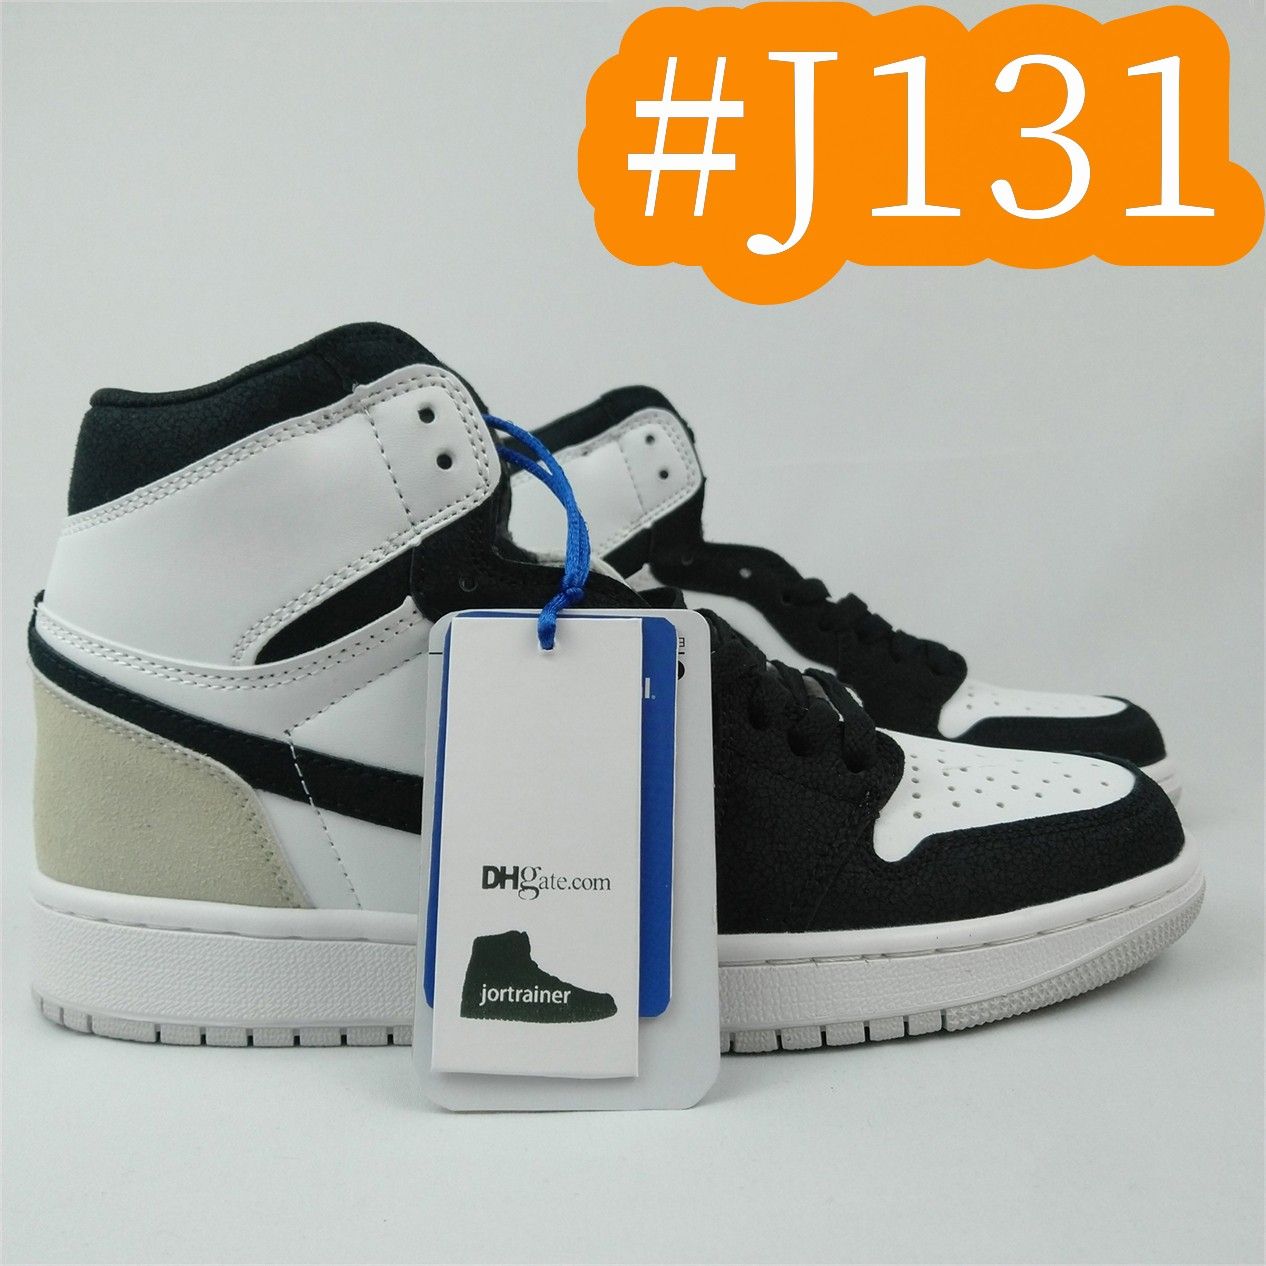 #J131